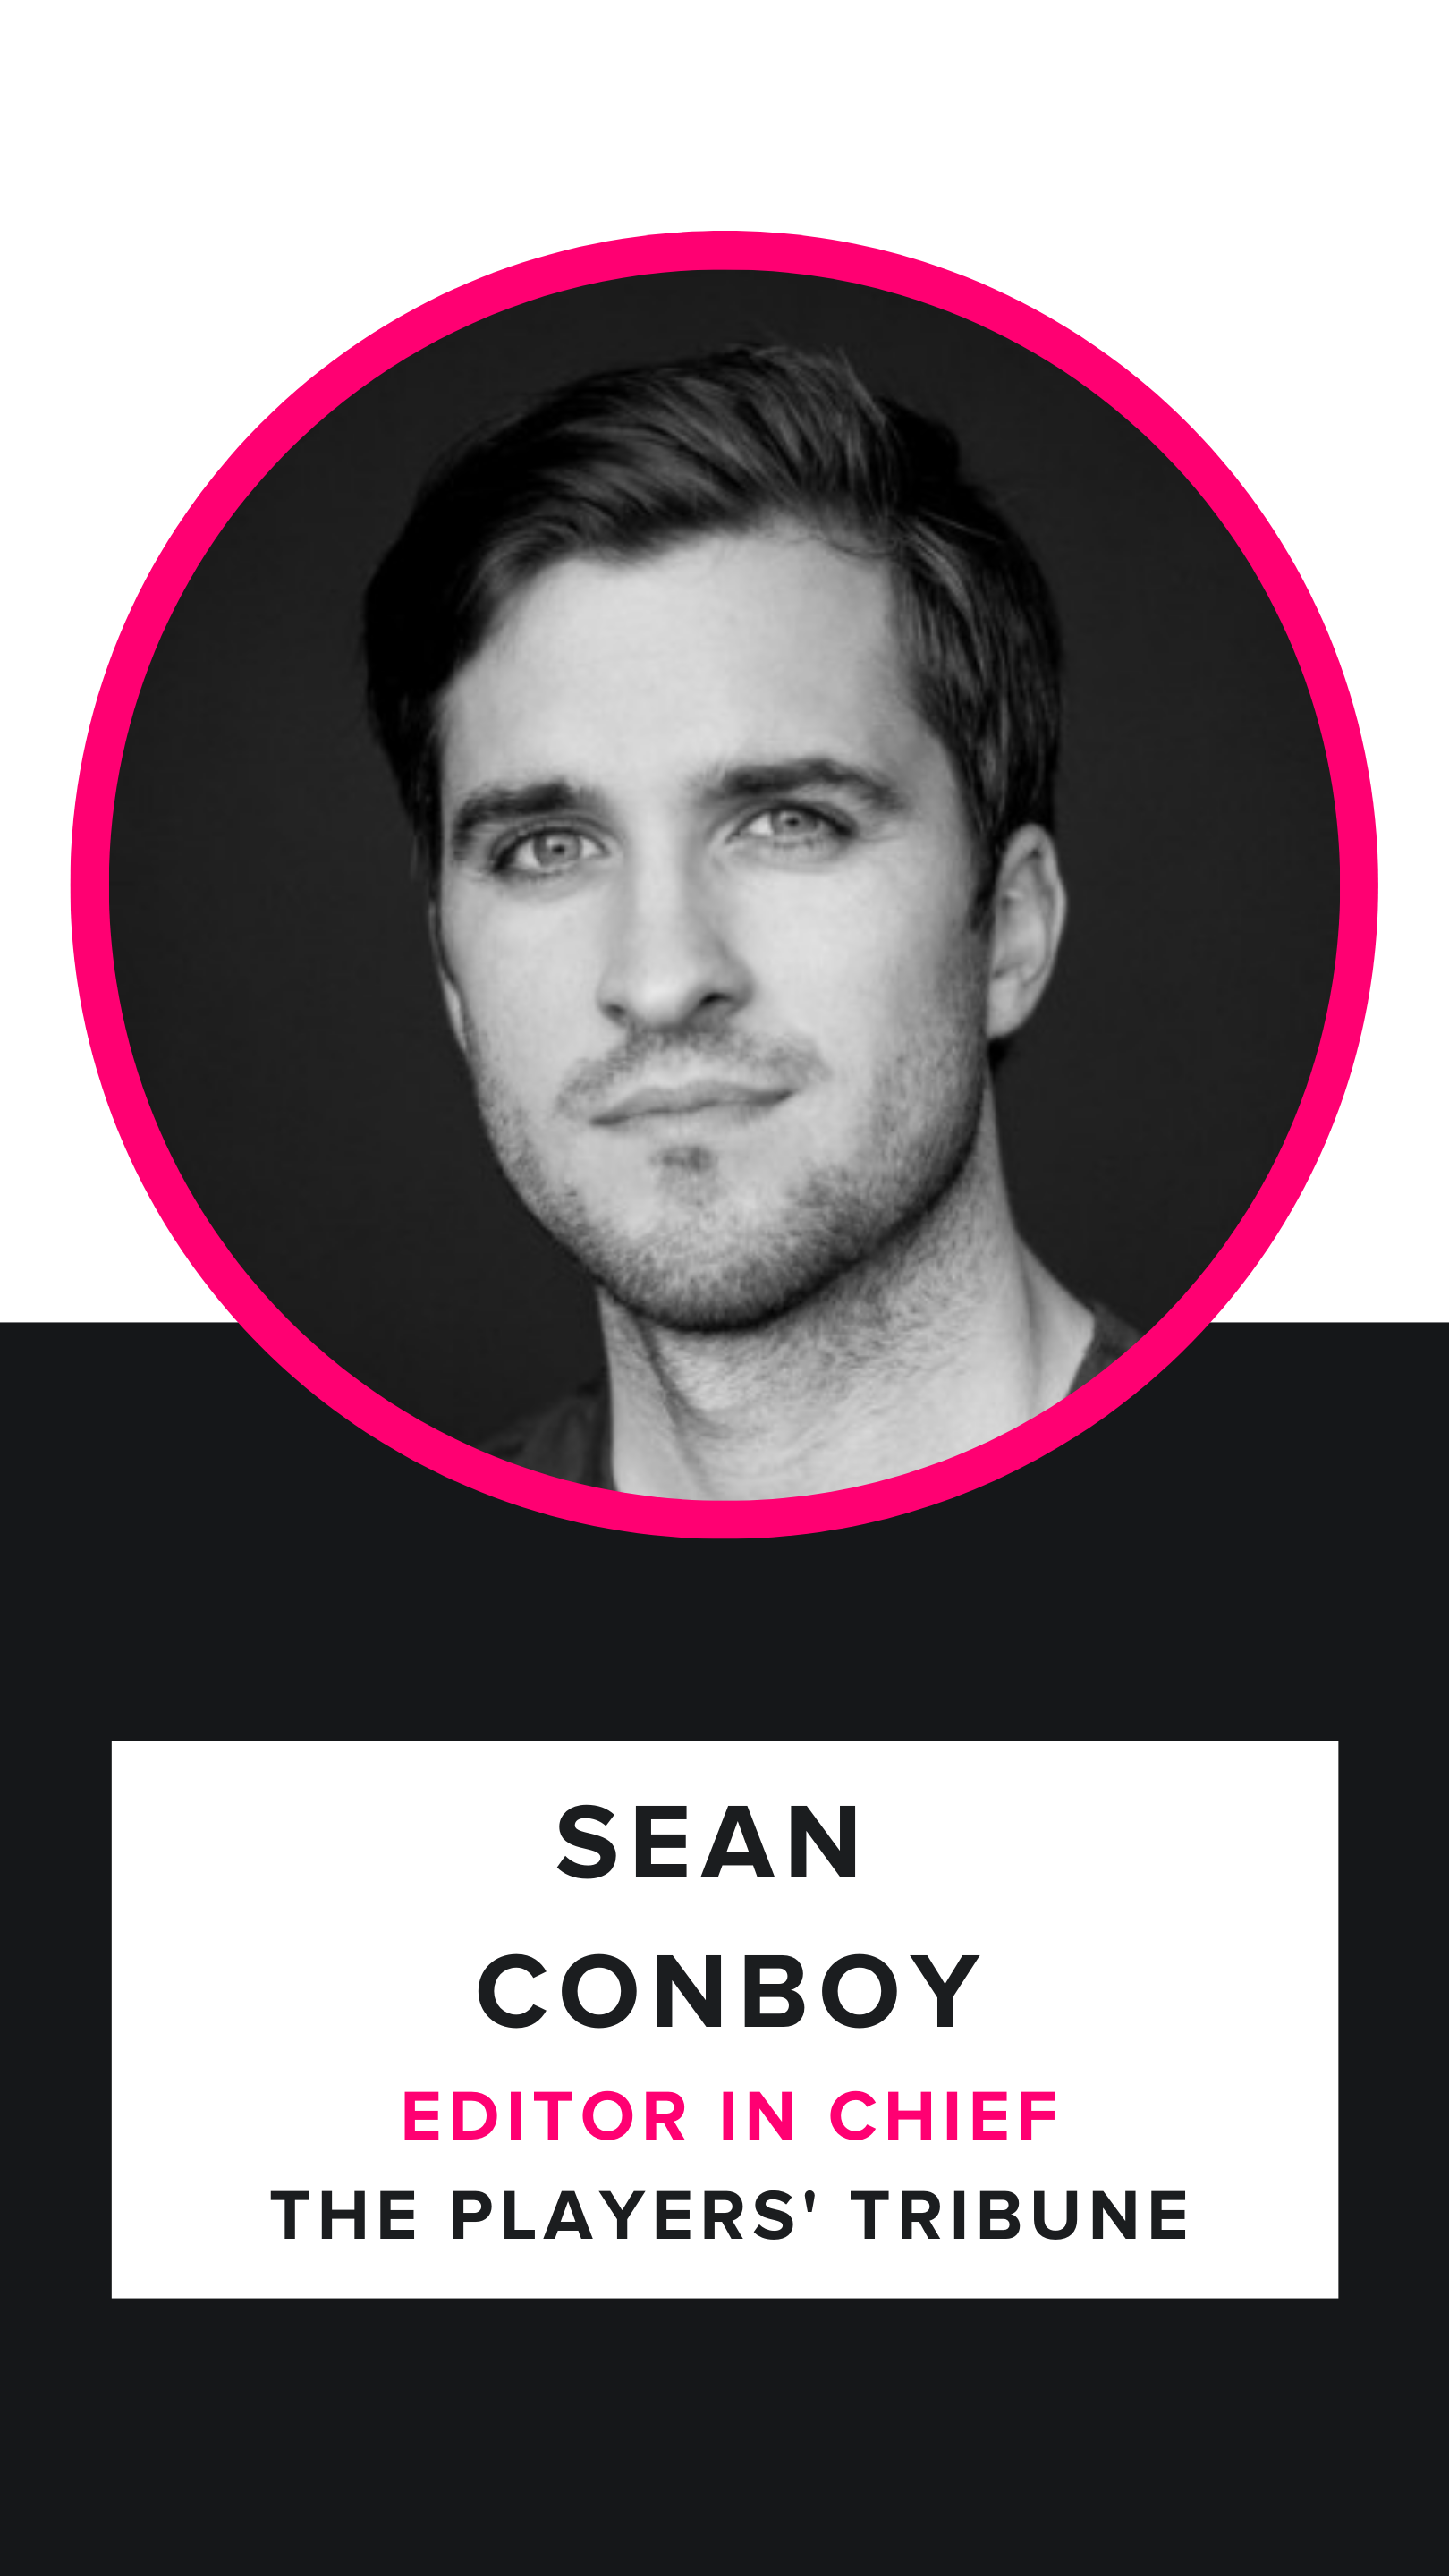 Sean Conboy